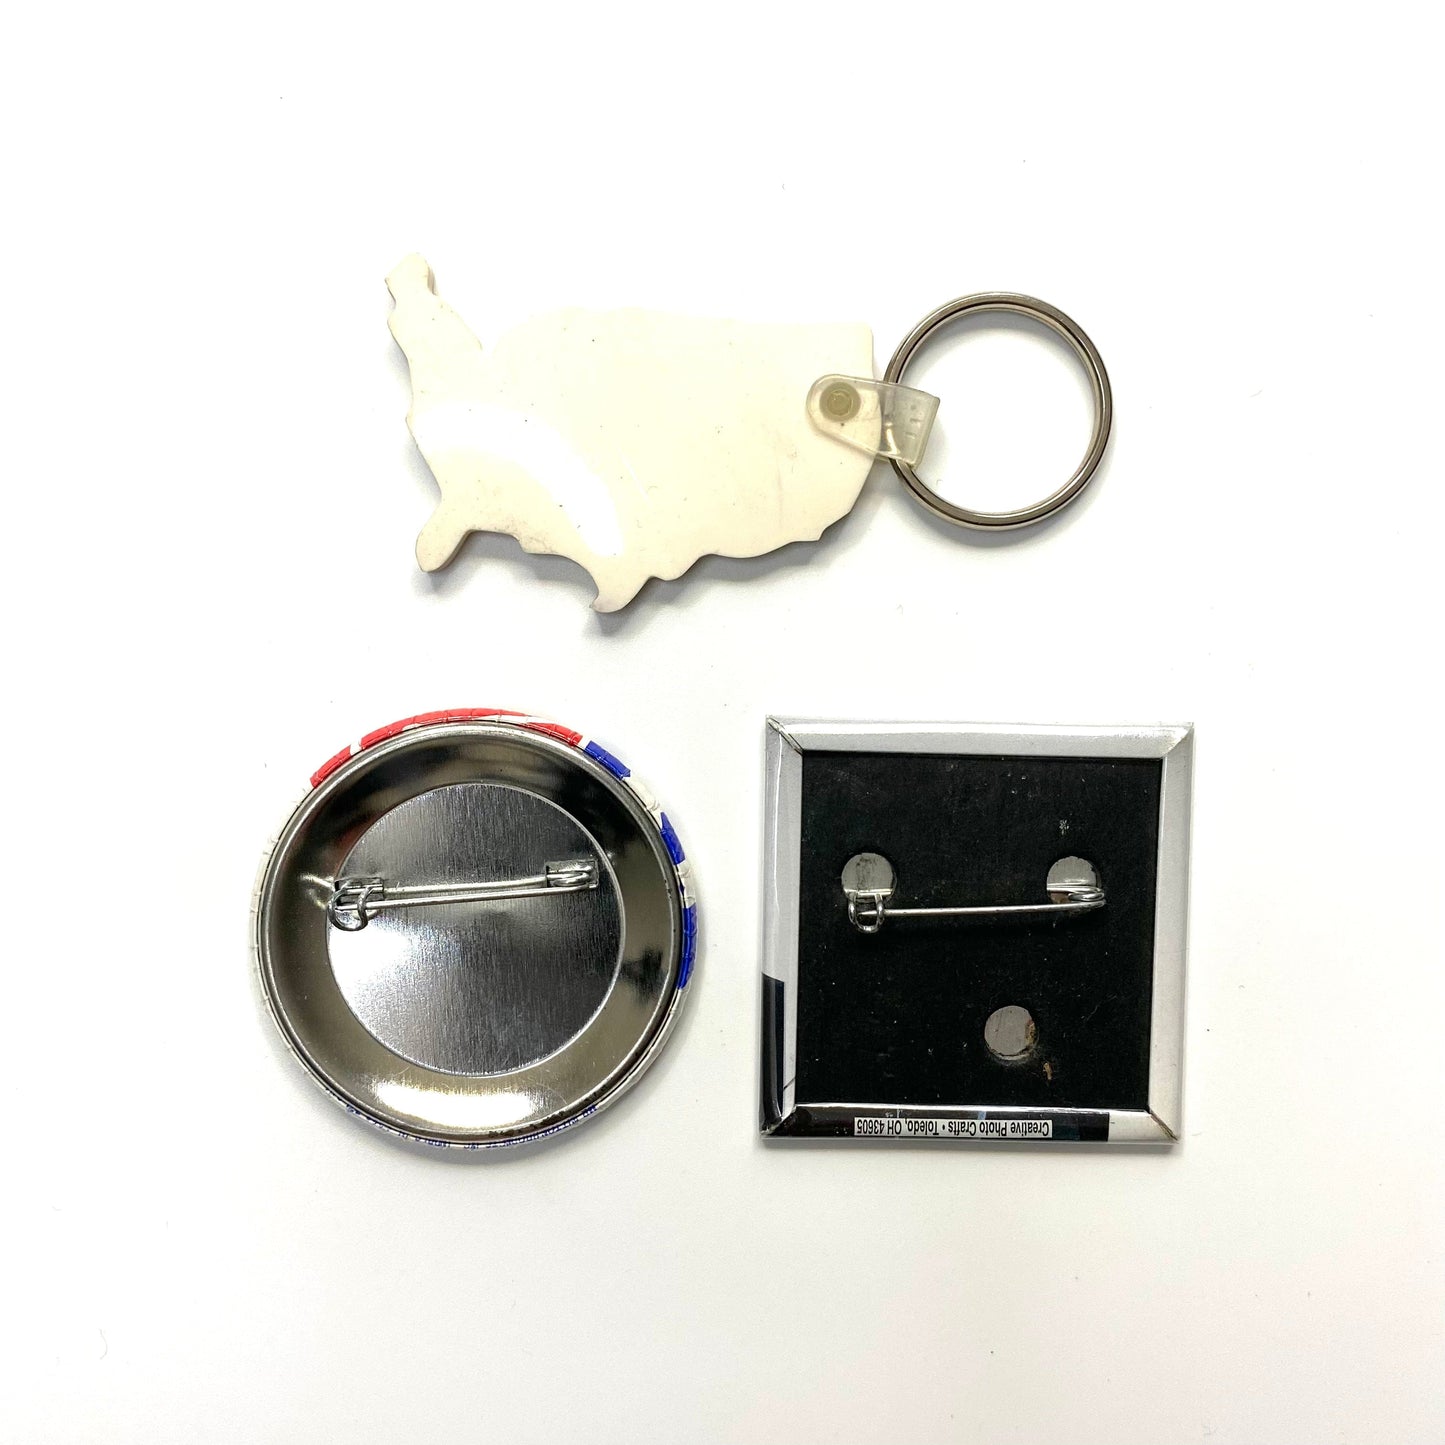 Ross Perot 1992 Presidential Campaign Keychain Pinback Button Pin Swag Memorabilia